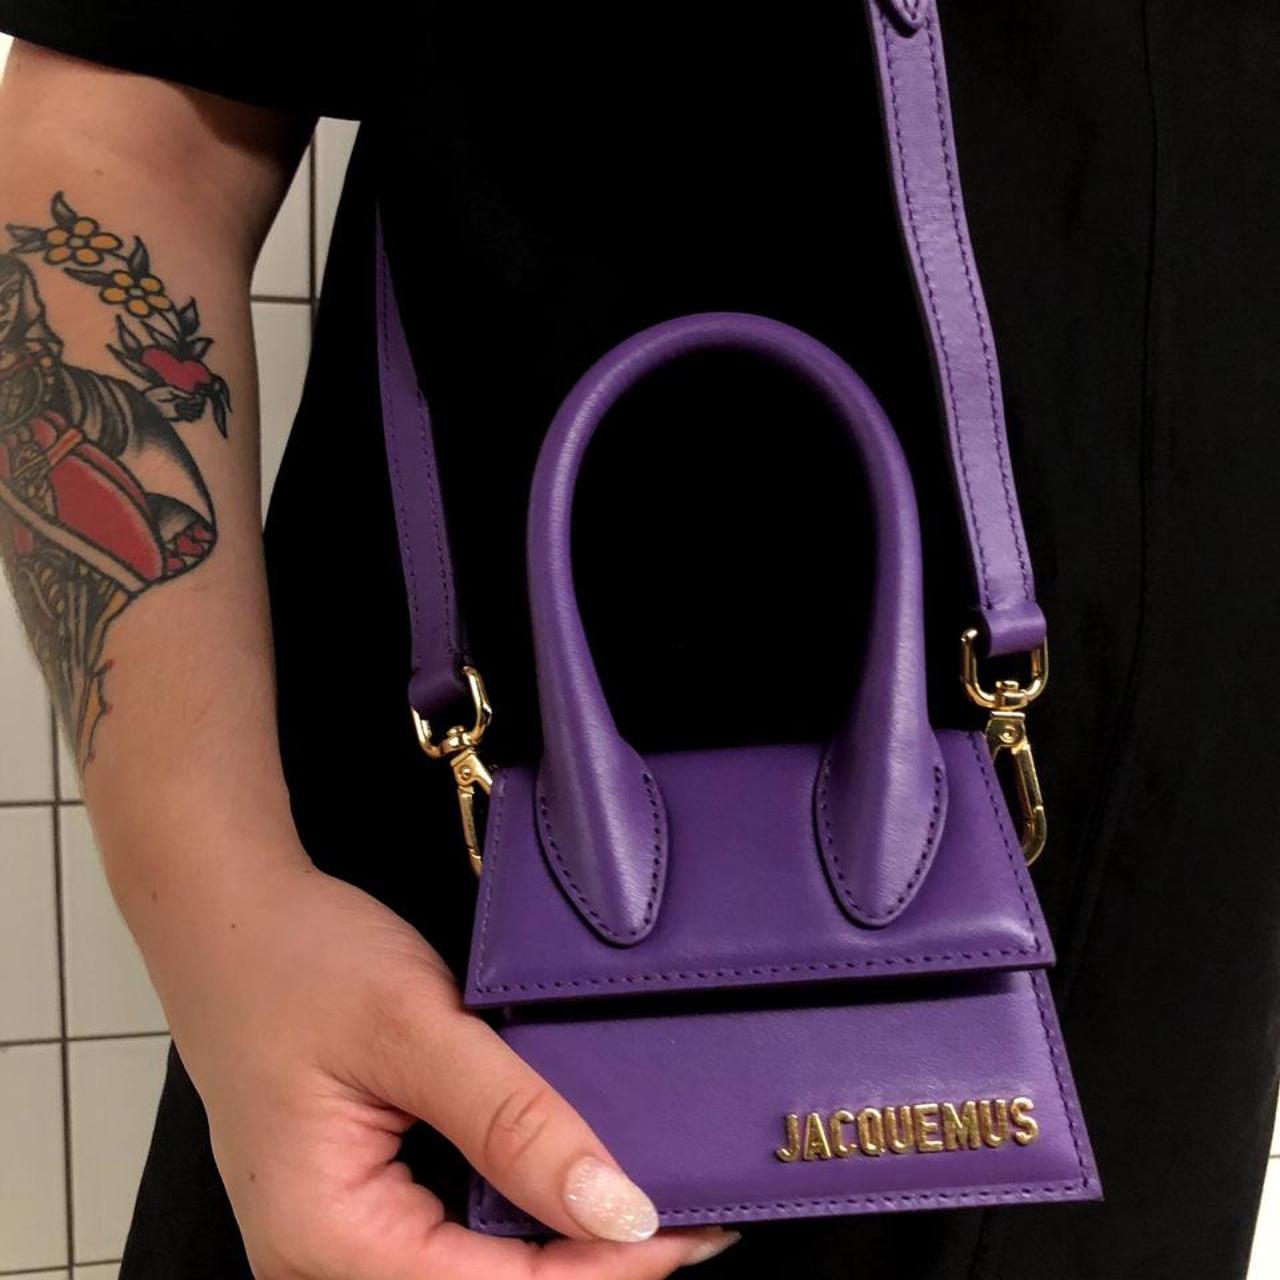 💜 Jacquemus Le Chiquito mini leather bag in purple 💜